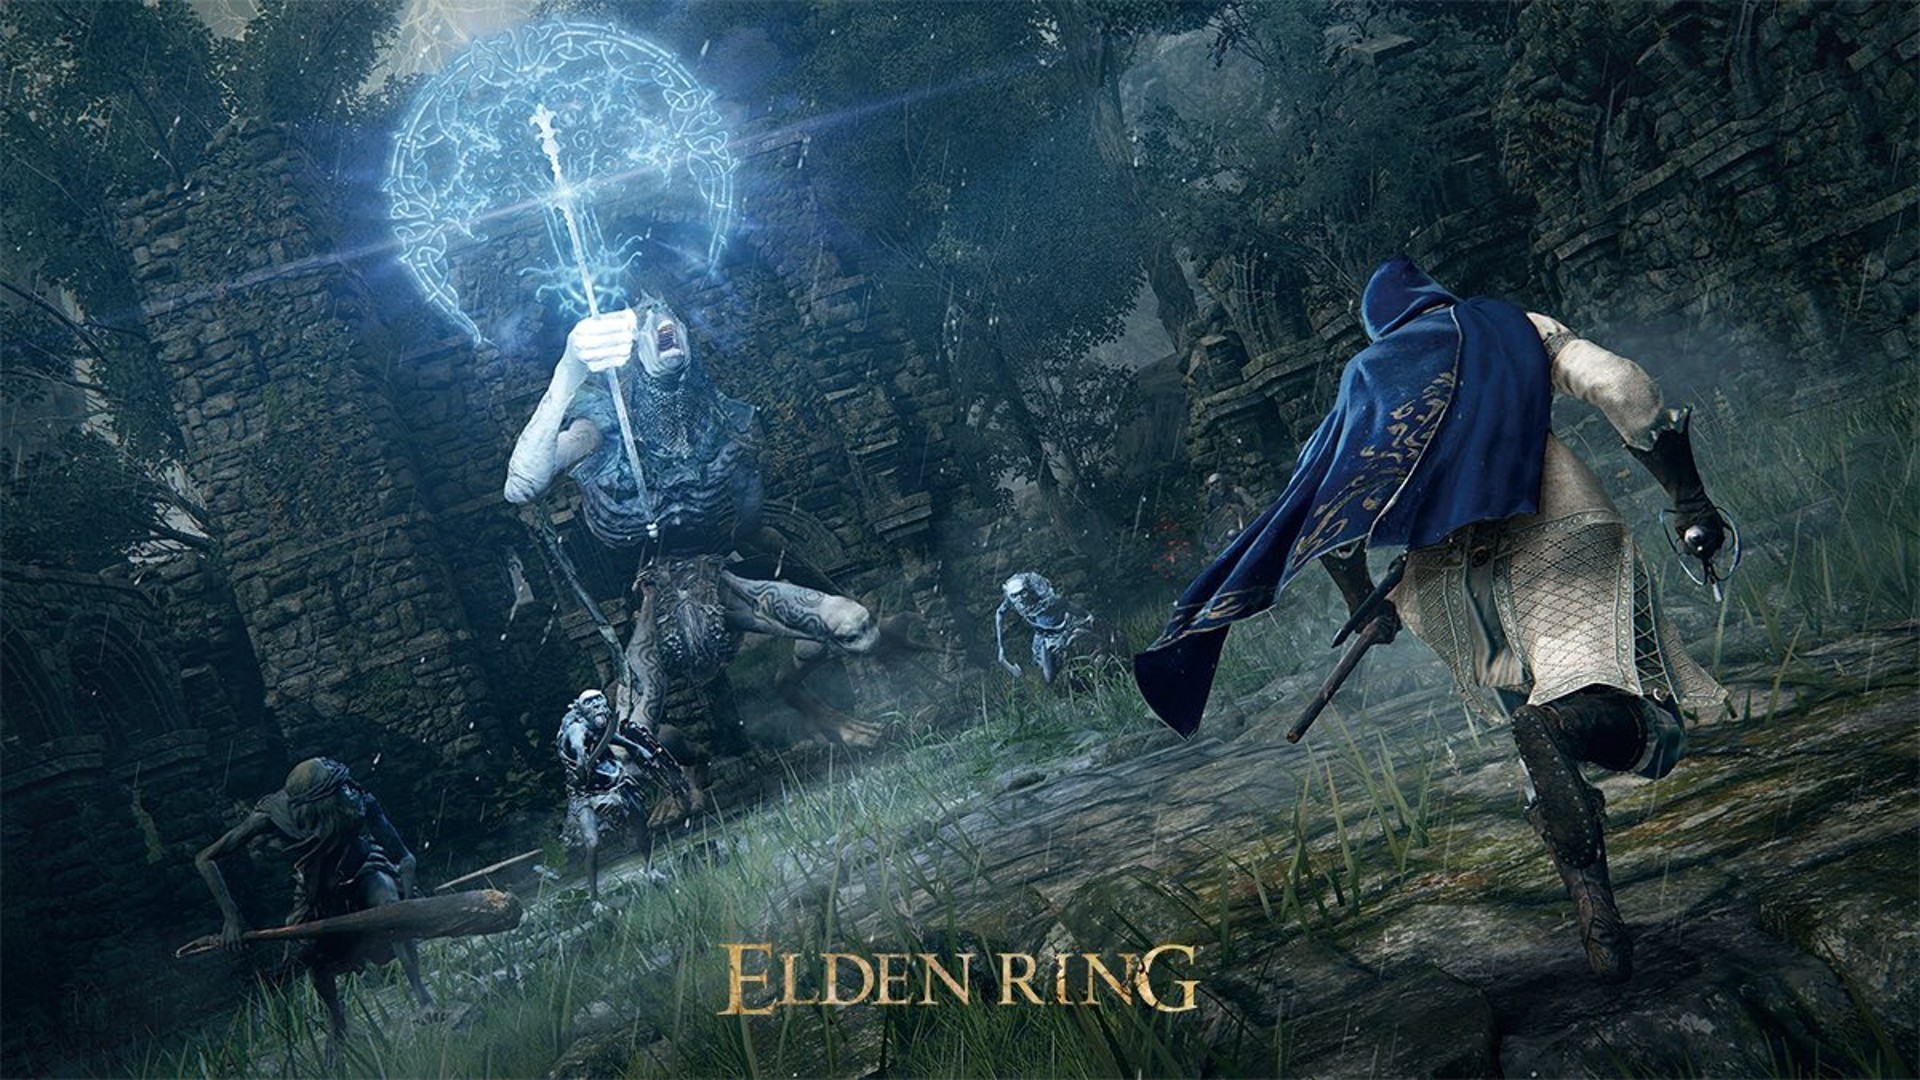 Elden Ring ถูกออกแบบให้เป็นเกมที่ยาก แต่ก็ใช่ว่าจะไม่สามารถเอาชนะได้